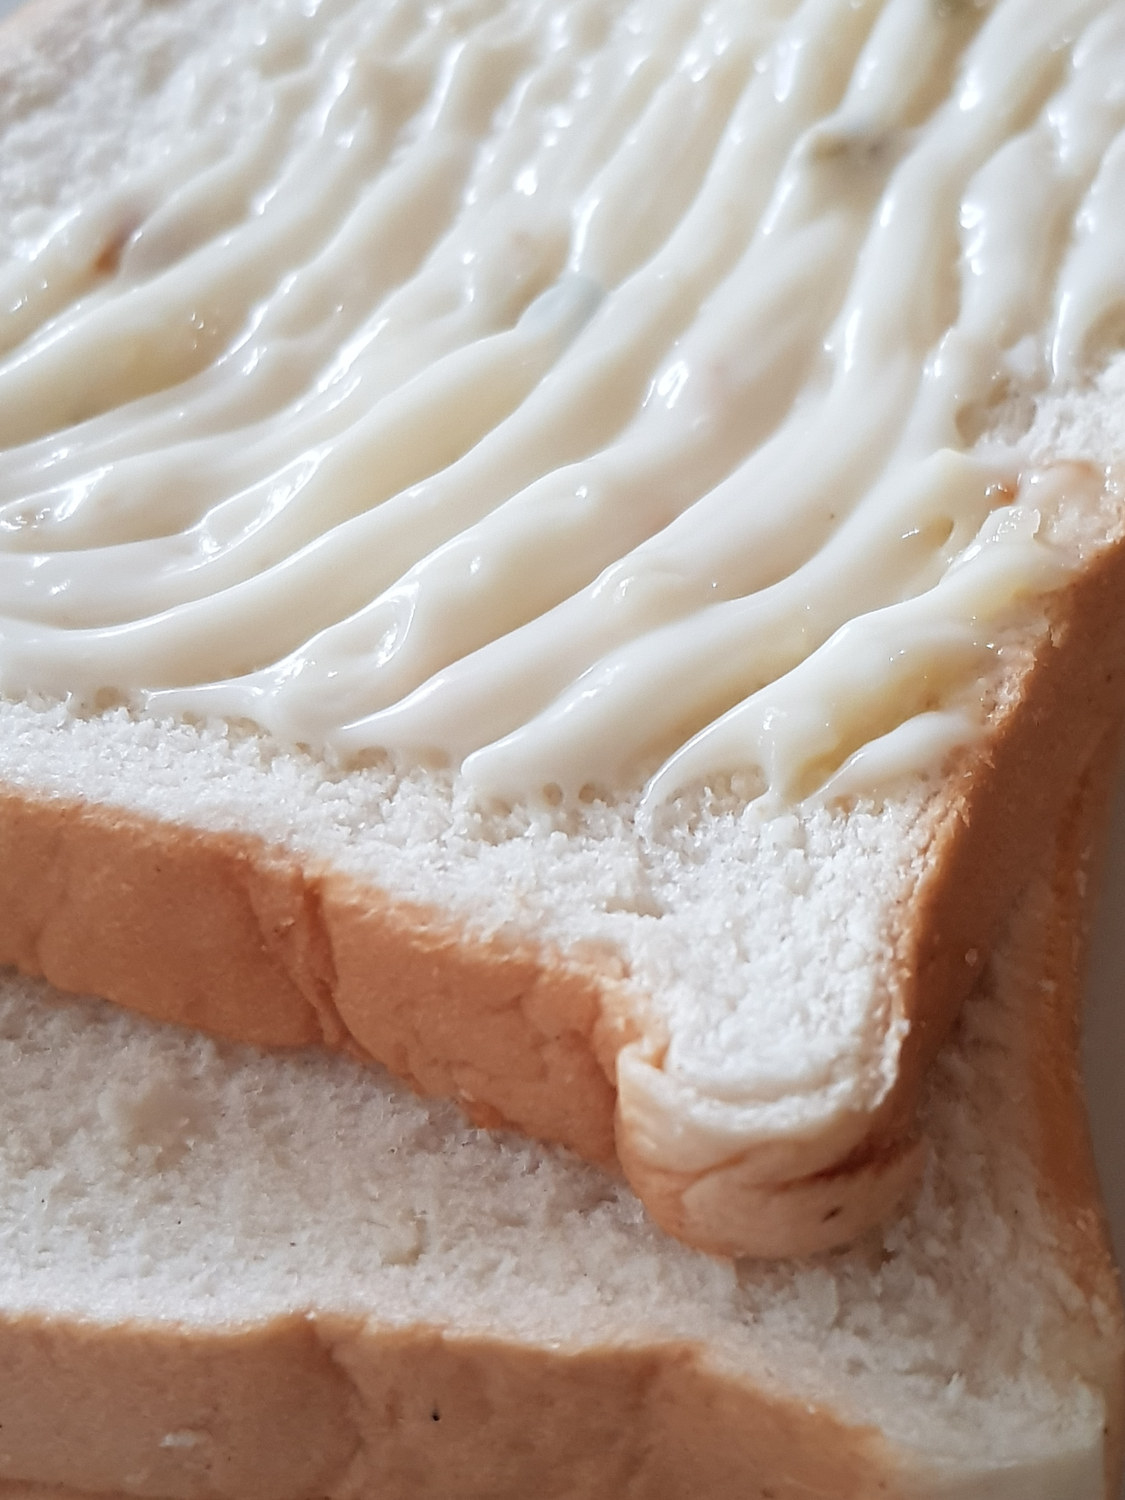 Mayo on white bread.